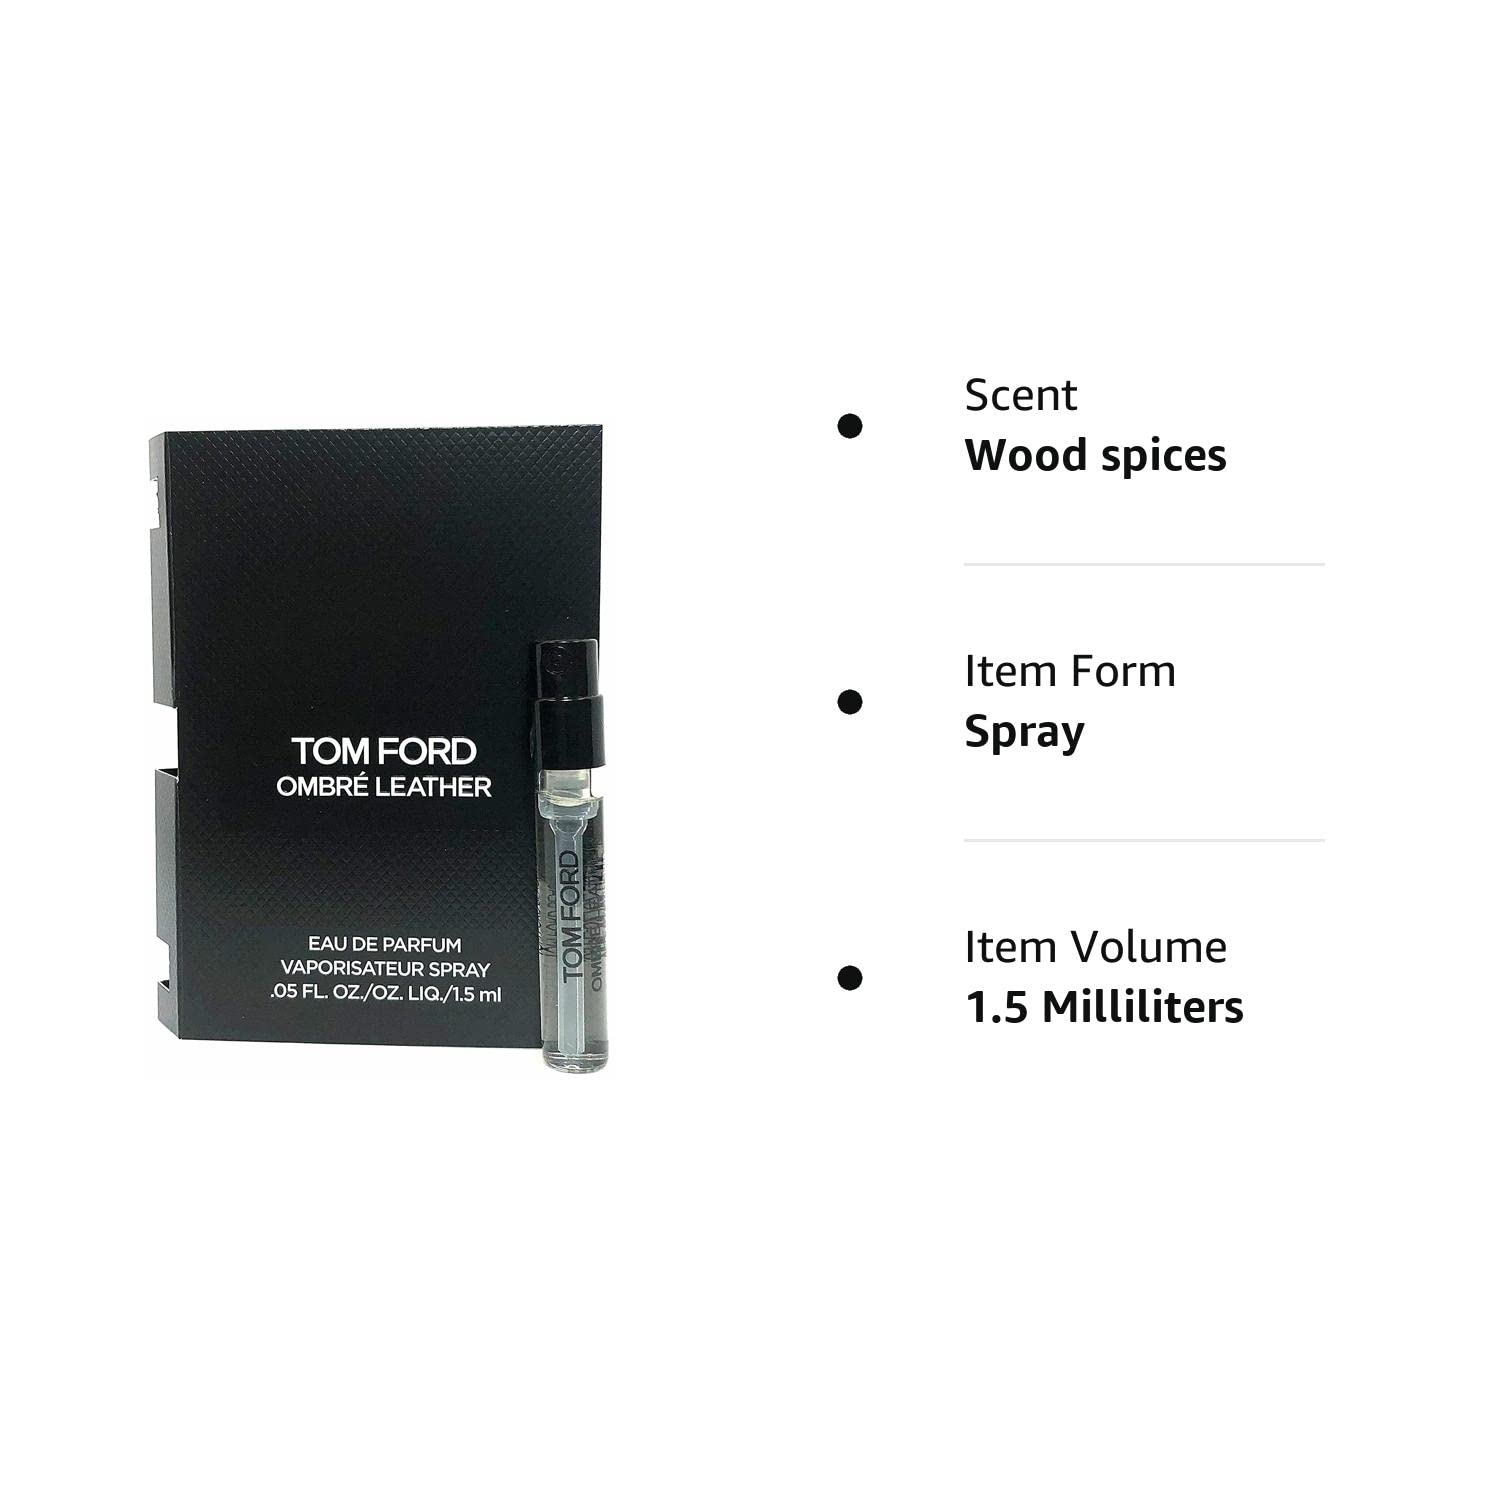 Tom Ford Ombre Leather Eau De Parfum Spray Vial For Men 0.05 Oz / 1.5 ml Sample Size